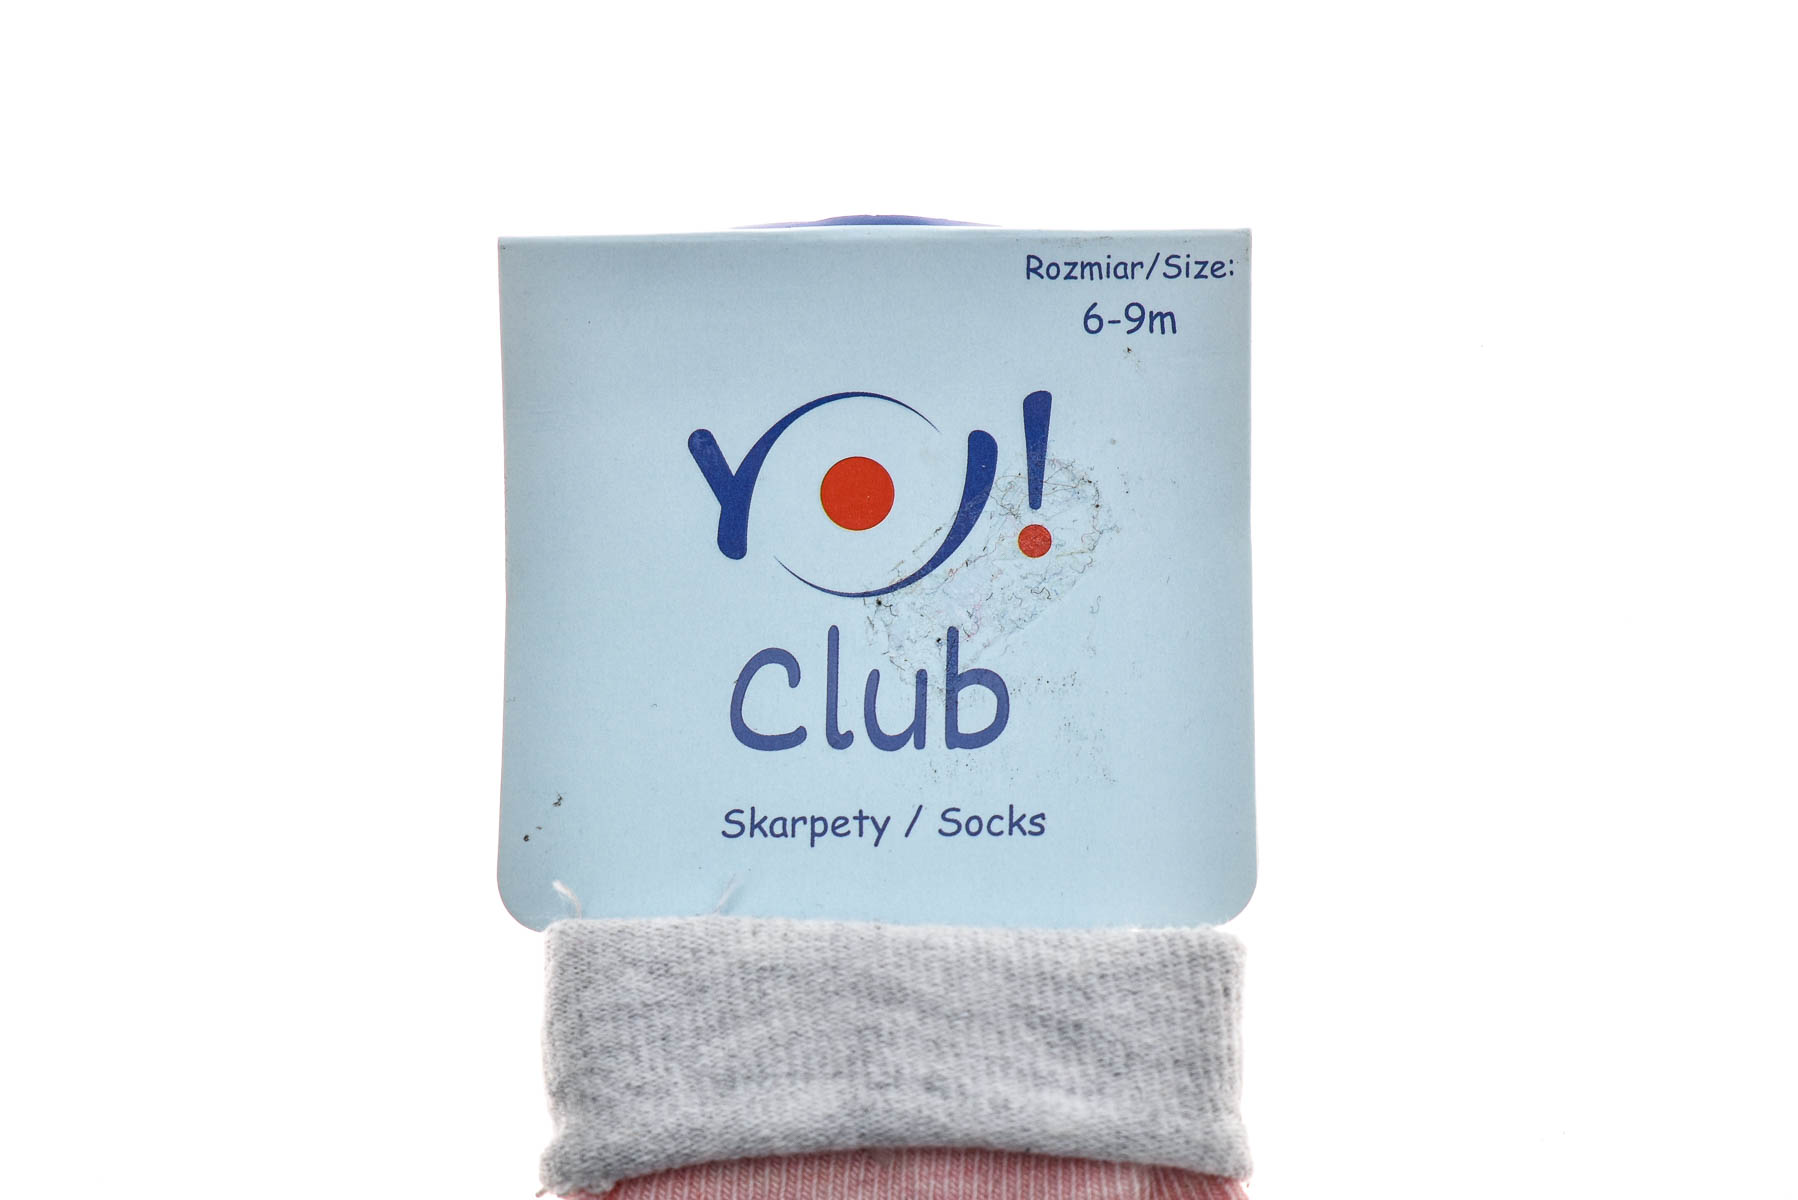 Șosete pentru bebeluși - YO! club - 1